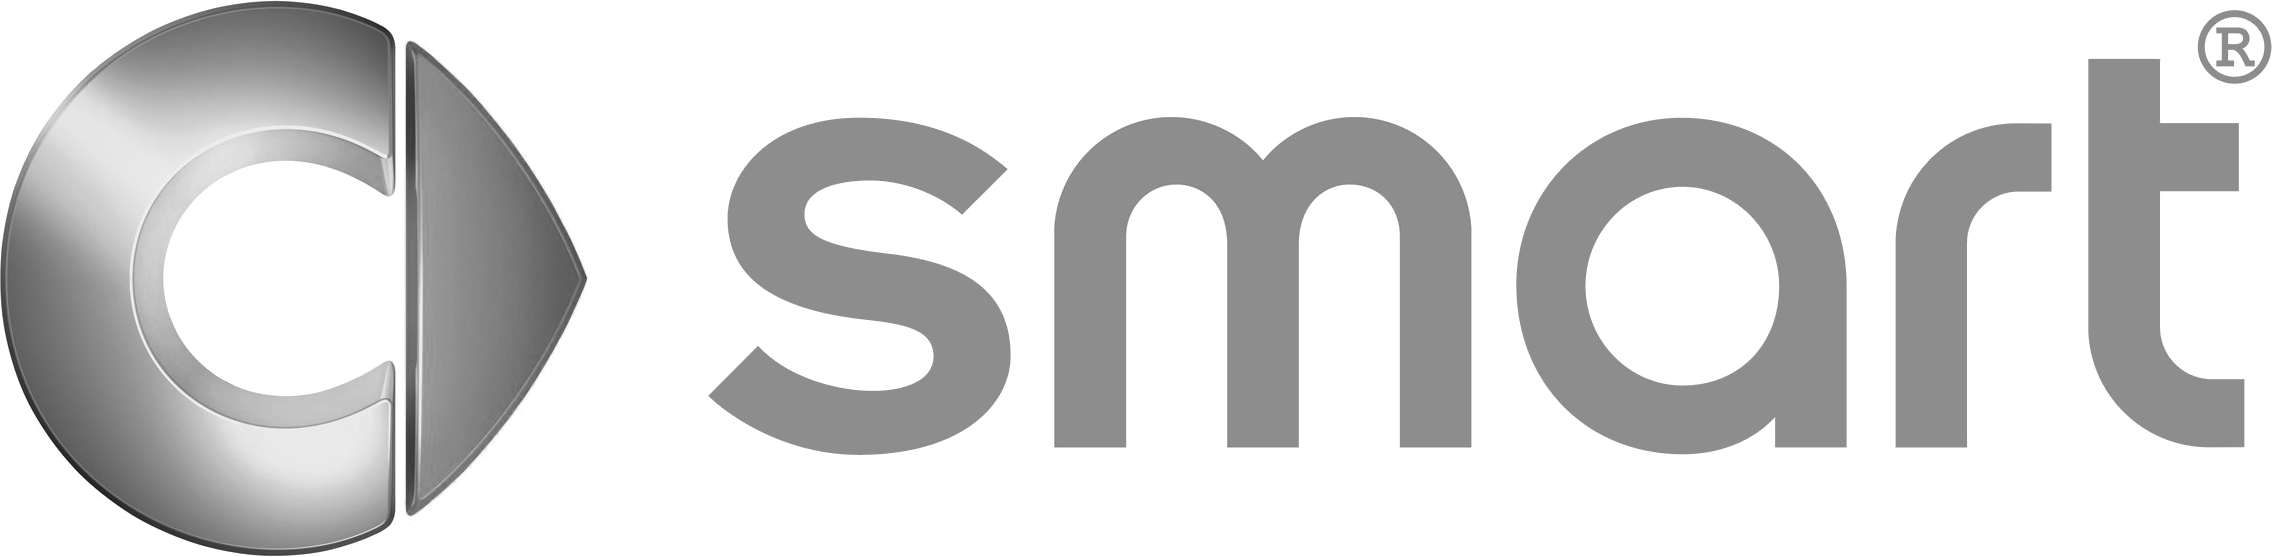 Smart_logo.png